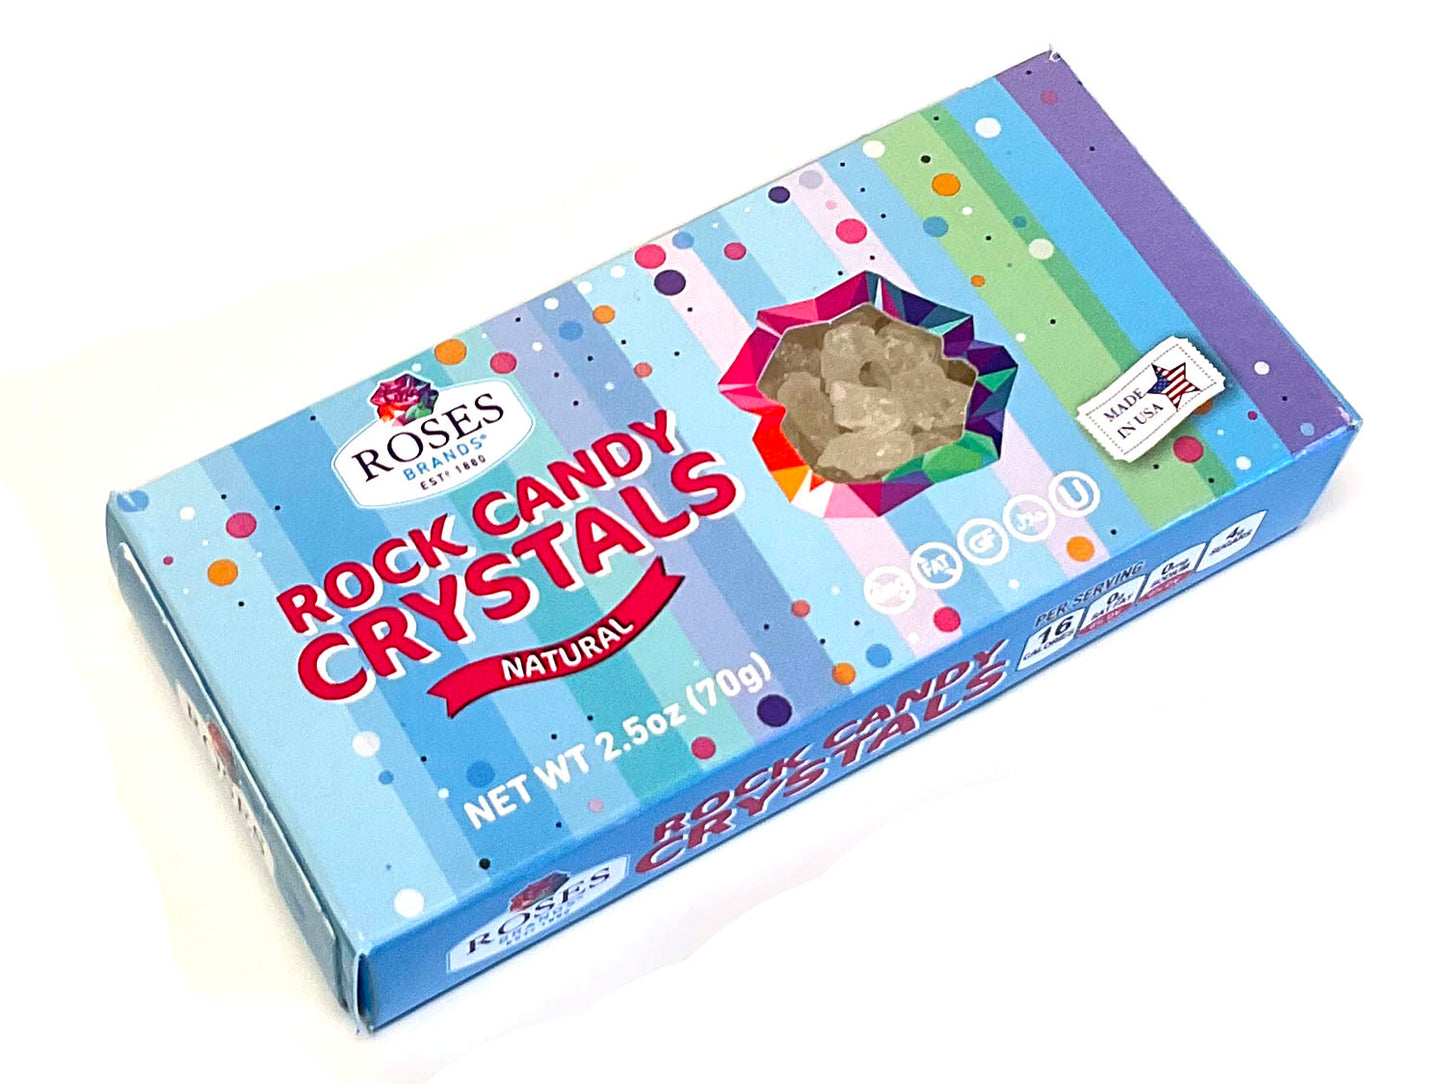 Rock Candy Crystals - 2.5 oz box